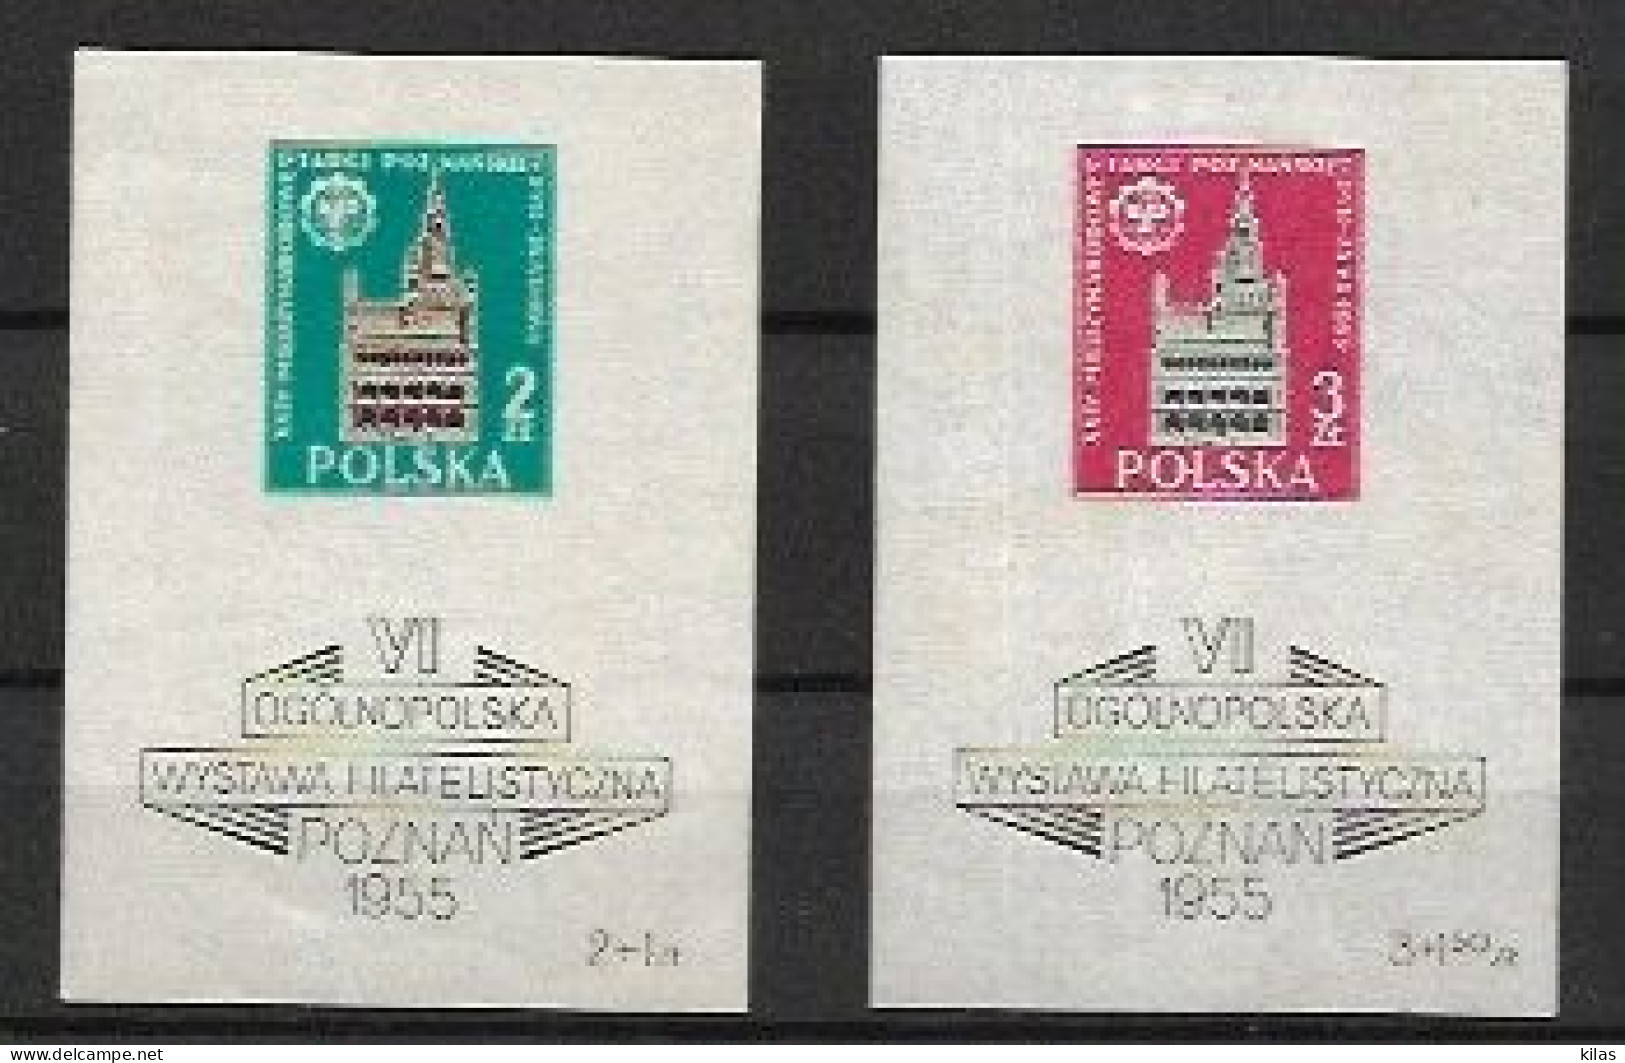 POLAND 1955 Sixth Poznan Philatelic Exhibition MNH - Blocs & Hojas